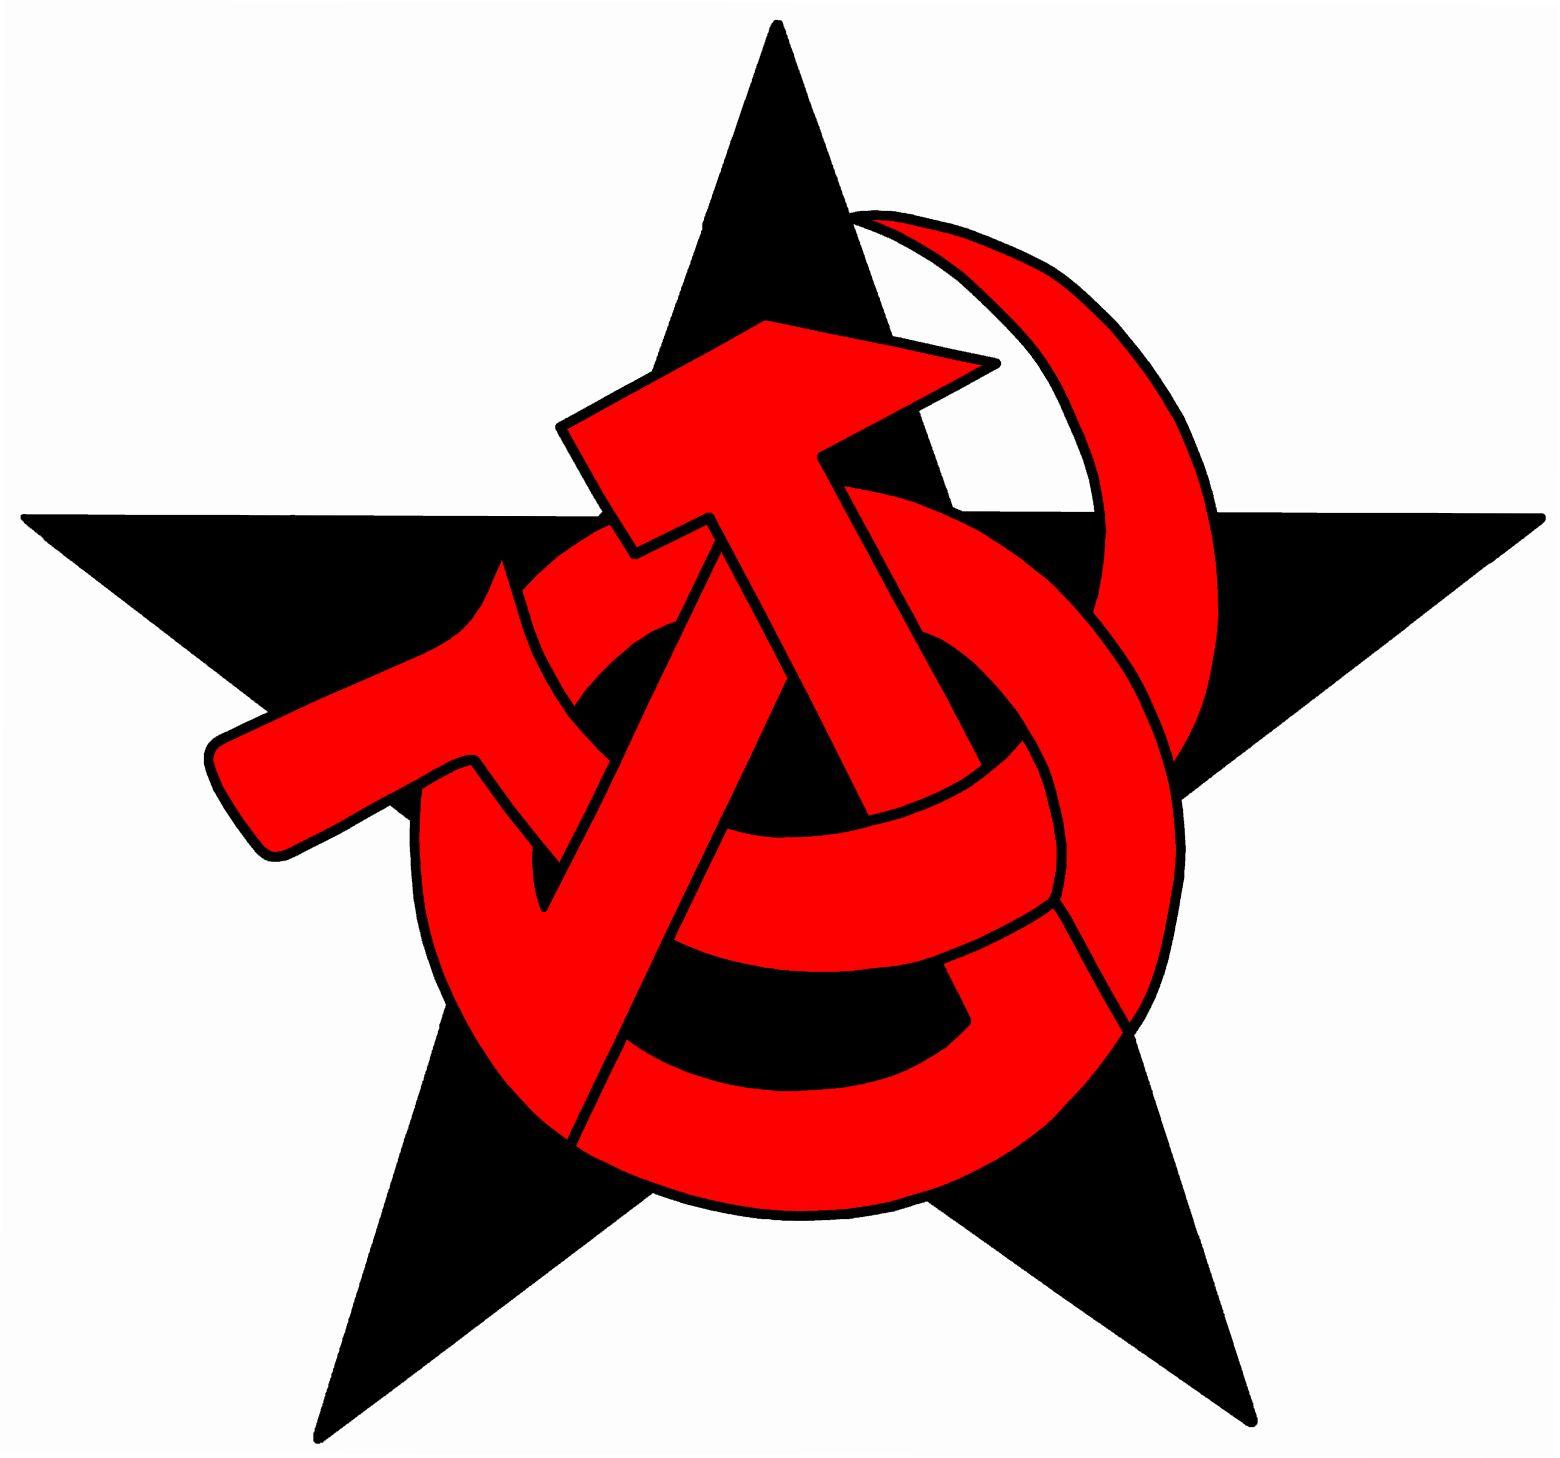 Communism Logo - File:Anarchist-Communist Symbol.jpg - Wikimedia Commons